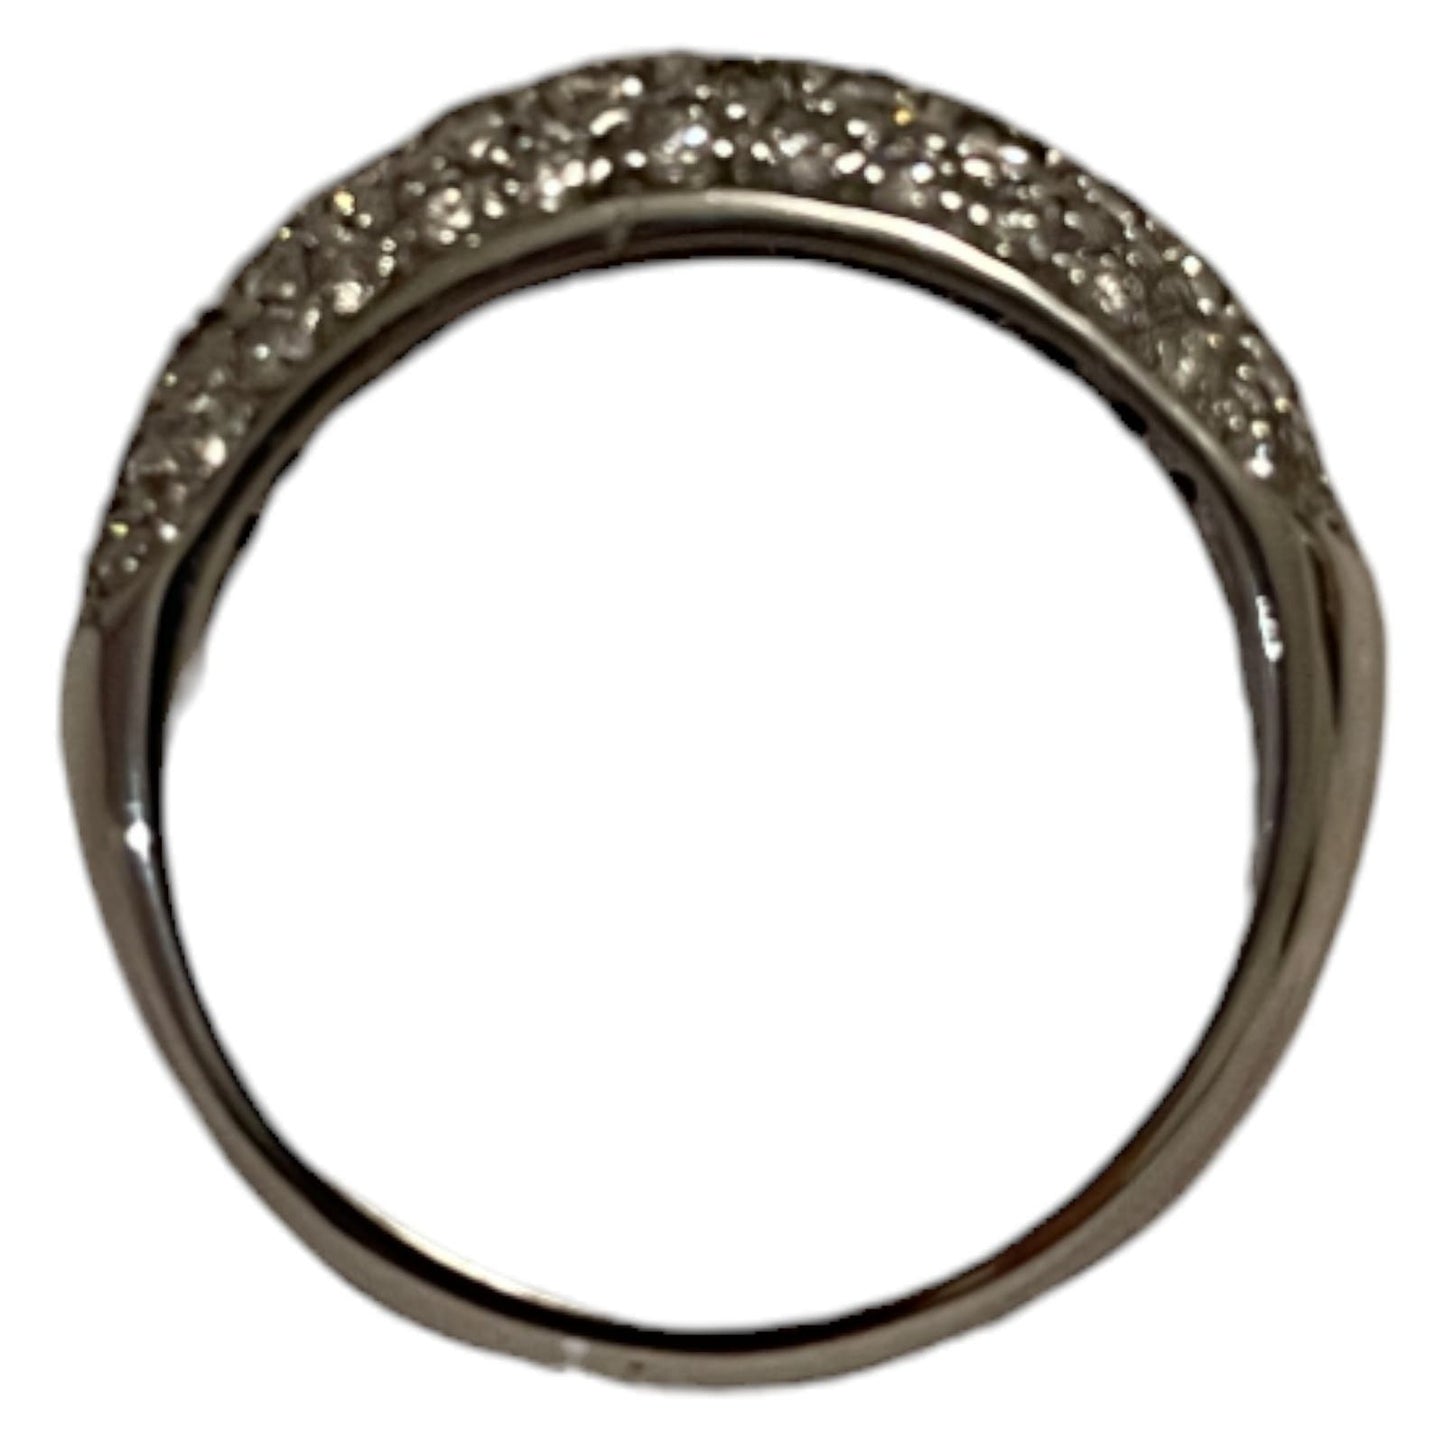 Cherish Your Forever: 14K White Gold 2.0 Ct Diamond Wedding Ring, Size 5.5